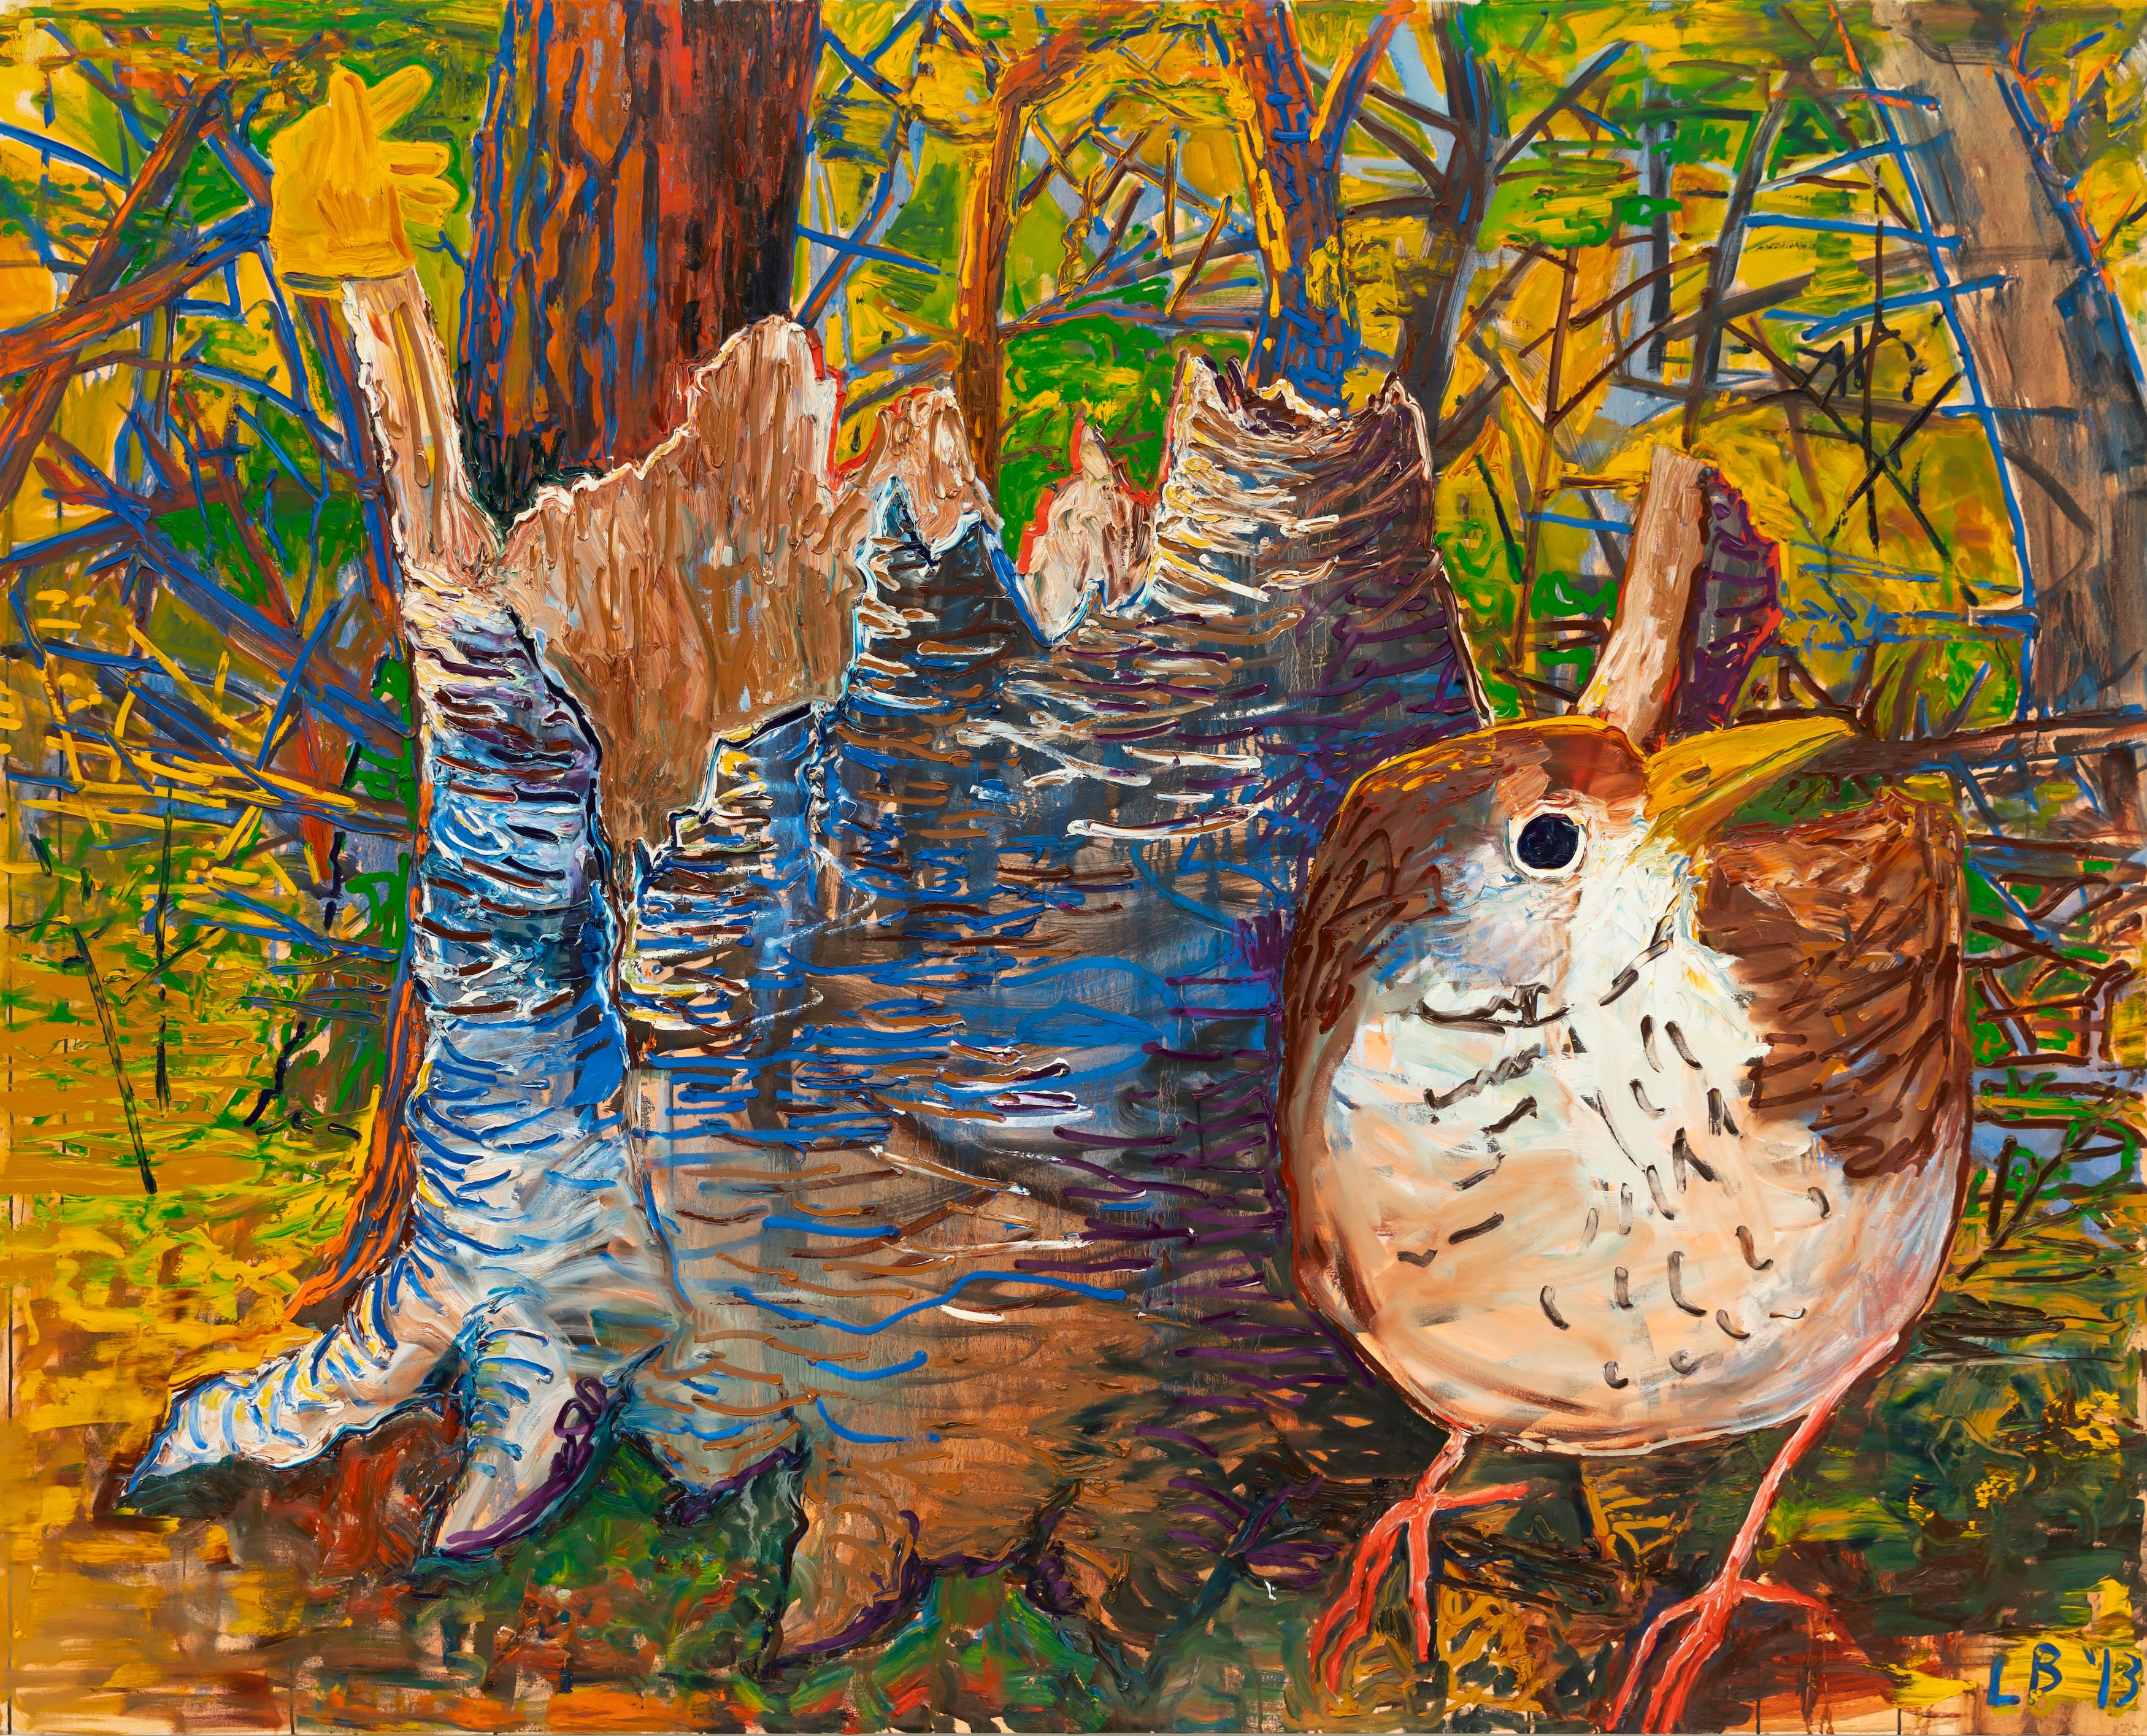 Leslie Bostrom Landscape Painting – The Yellow Grove, Öl auf Leinwand, 2013